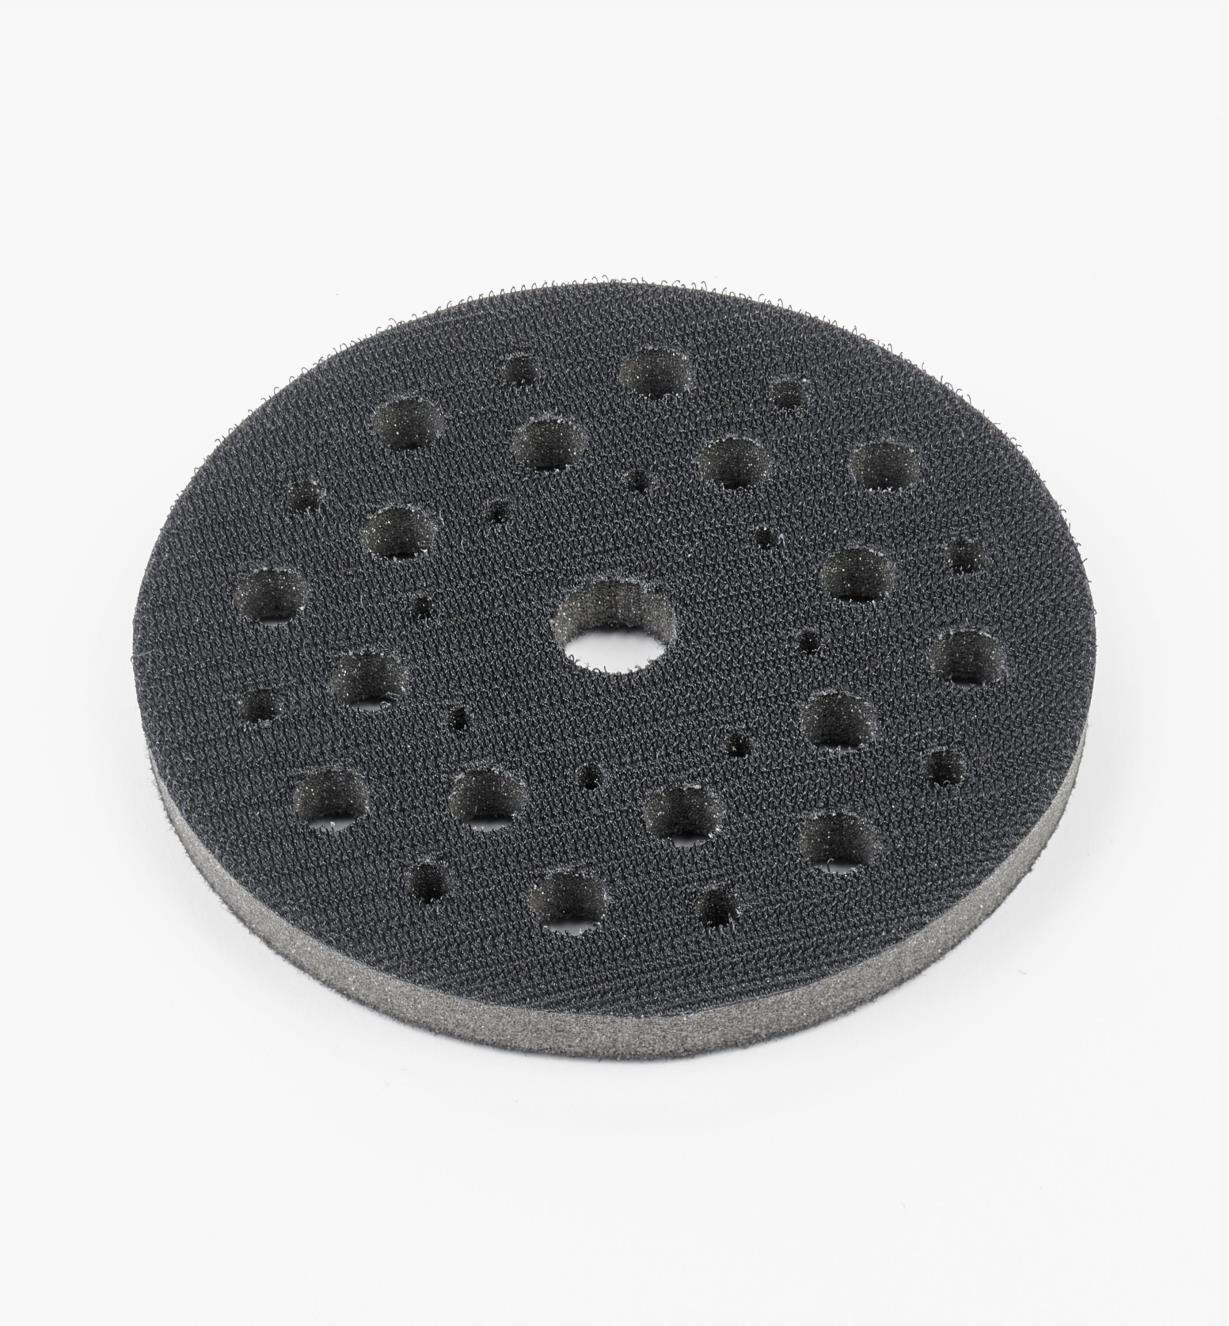 08K1125 - 5" × 3/8" Multi-Hole Grip-Faced Interface Pad